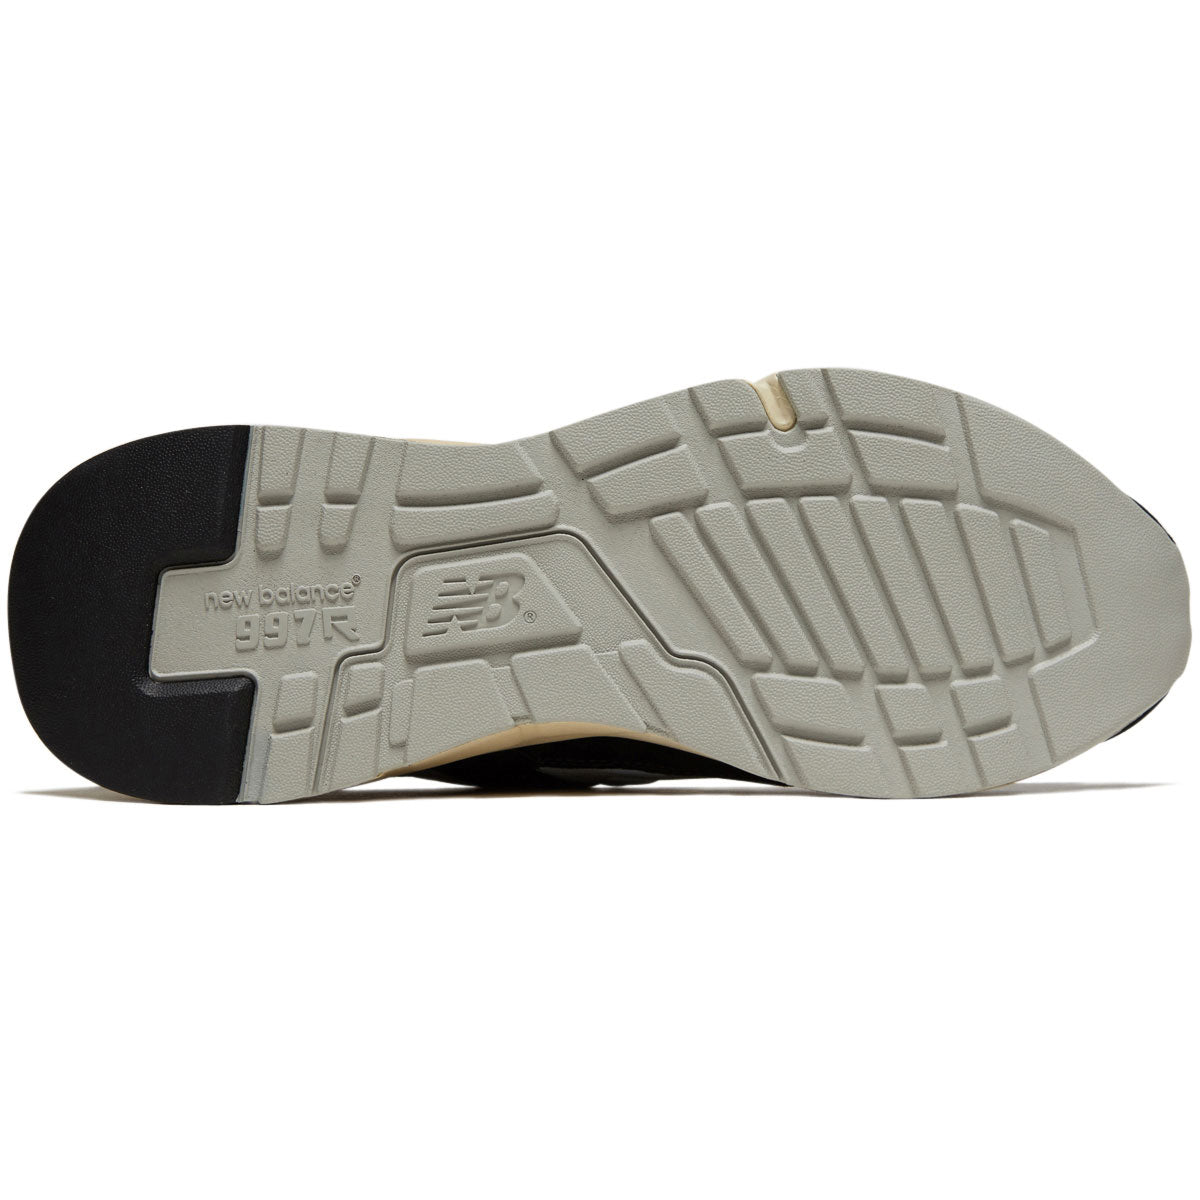 New Balance 997R Shoes - Black/Shadow Grey image 4